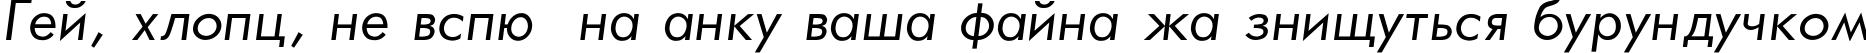 Пример написания шрифтом Futura_Book-Normal-Italic текста на украинском